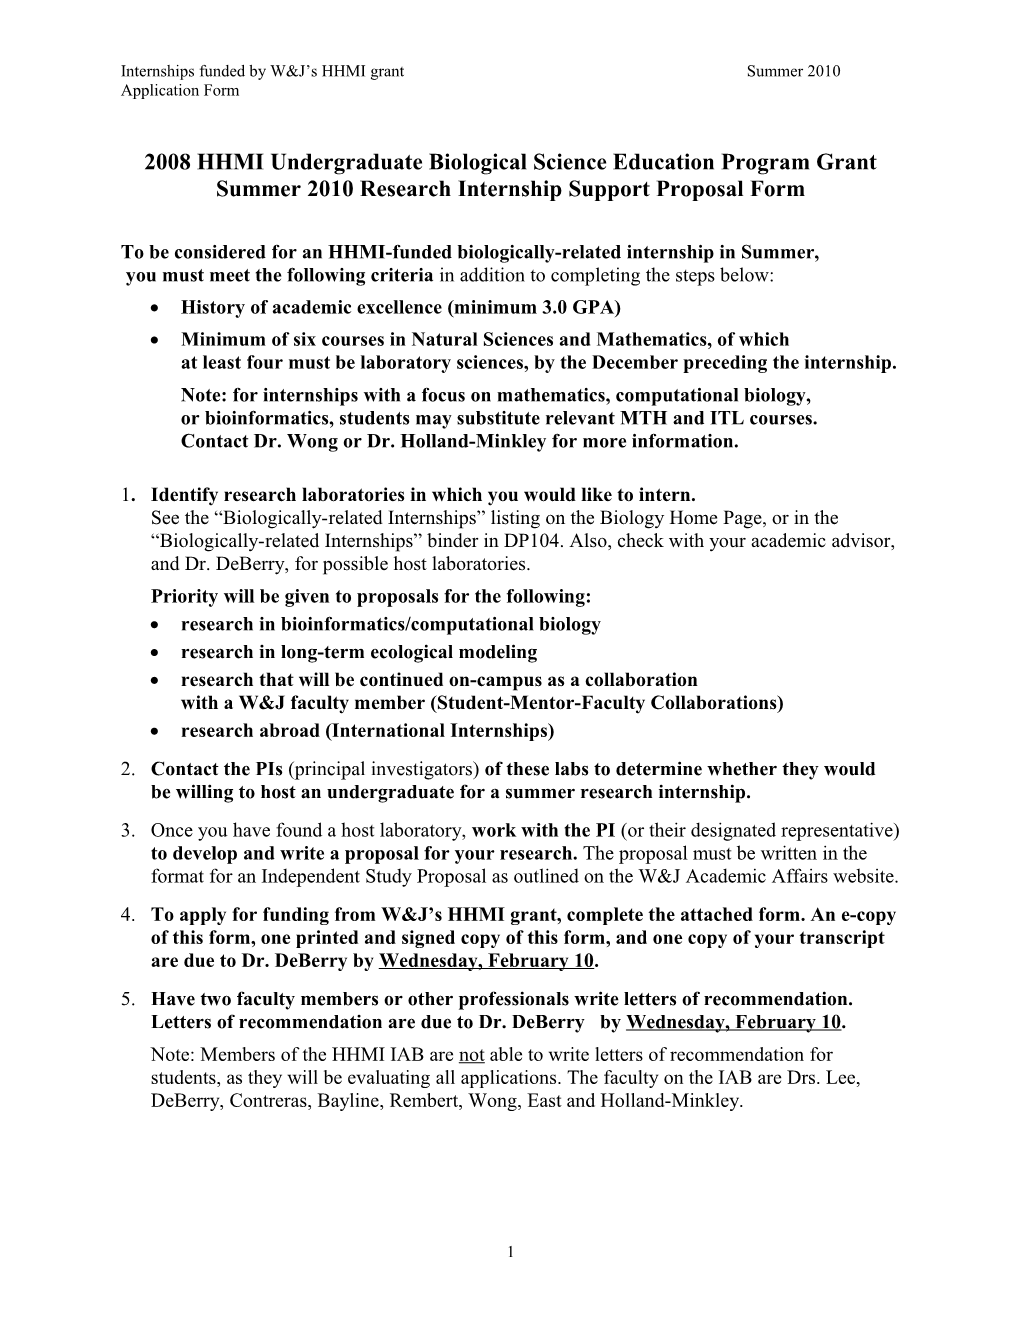 HHMI Summer Internship Support Proposal Form